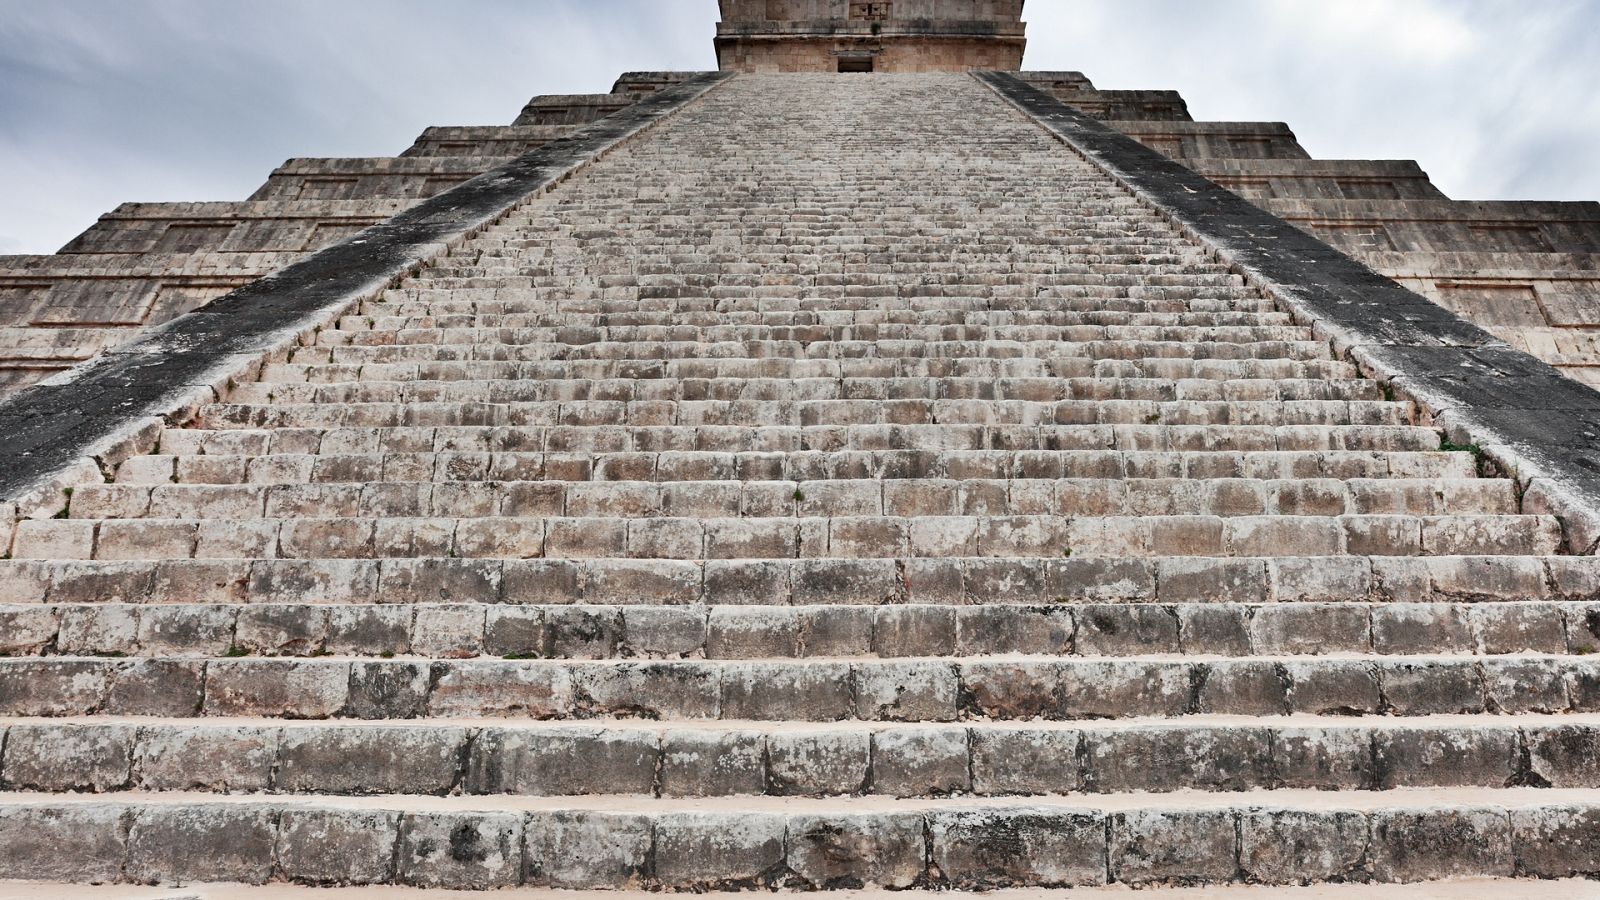 Kukulkan pyramid steps close-up, Chichen Itza, Mexico